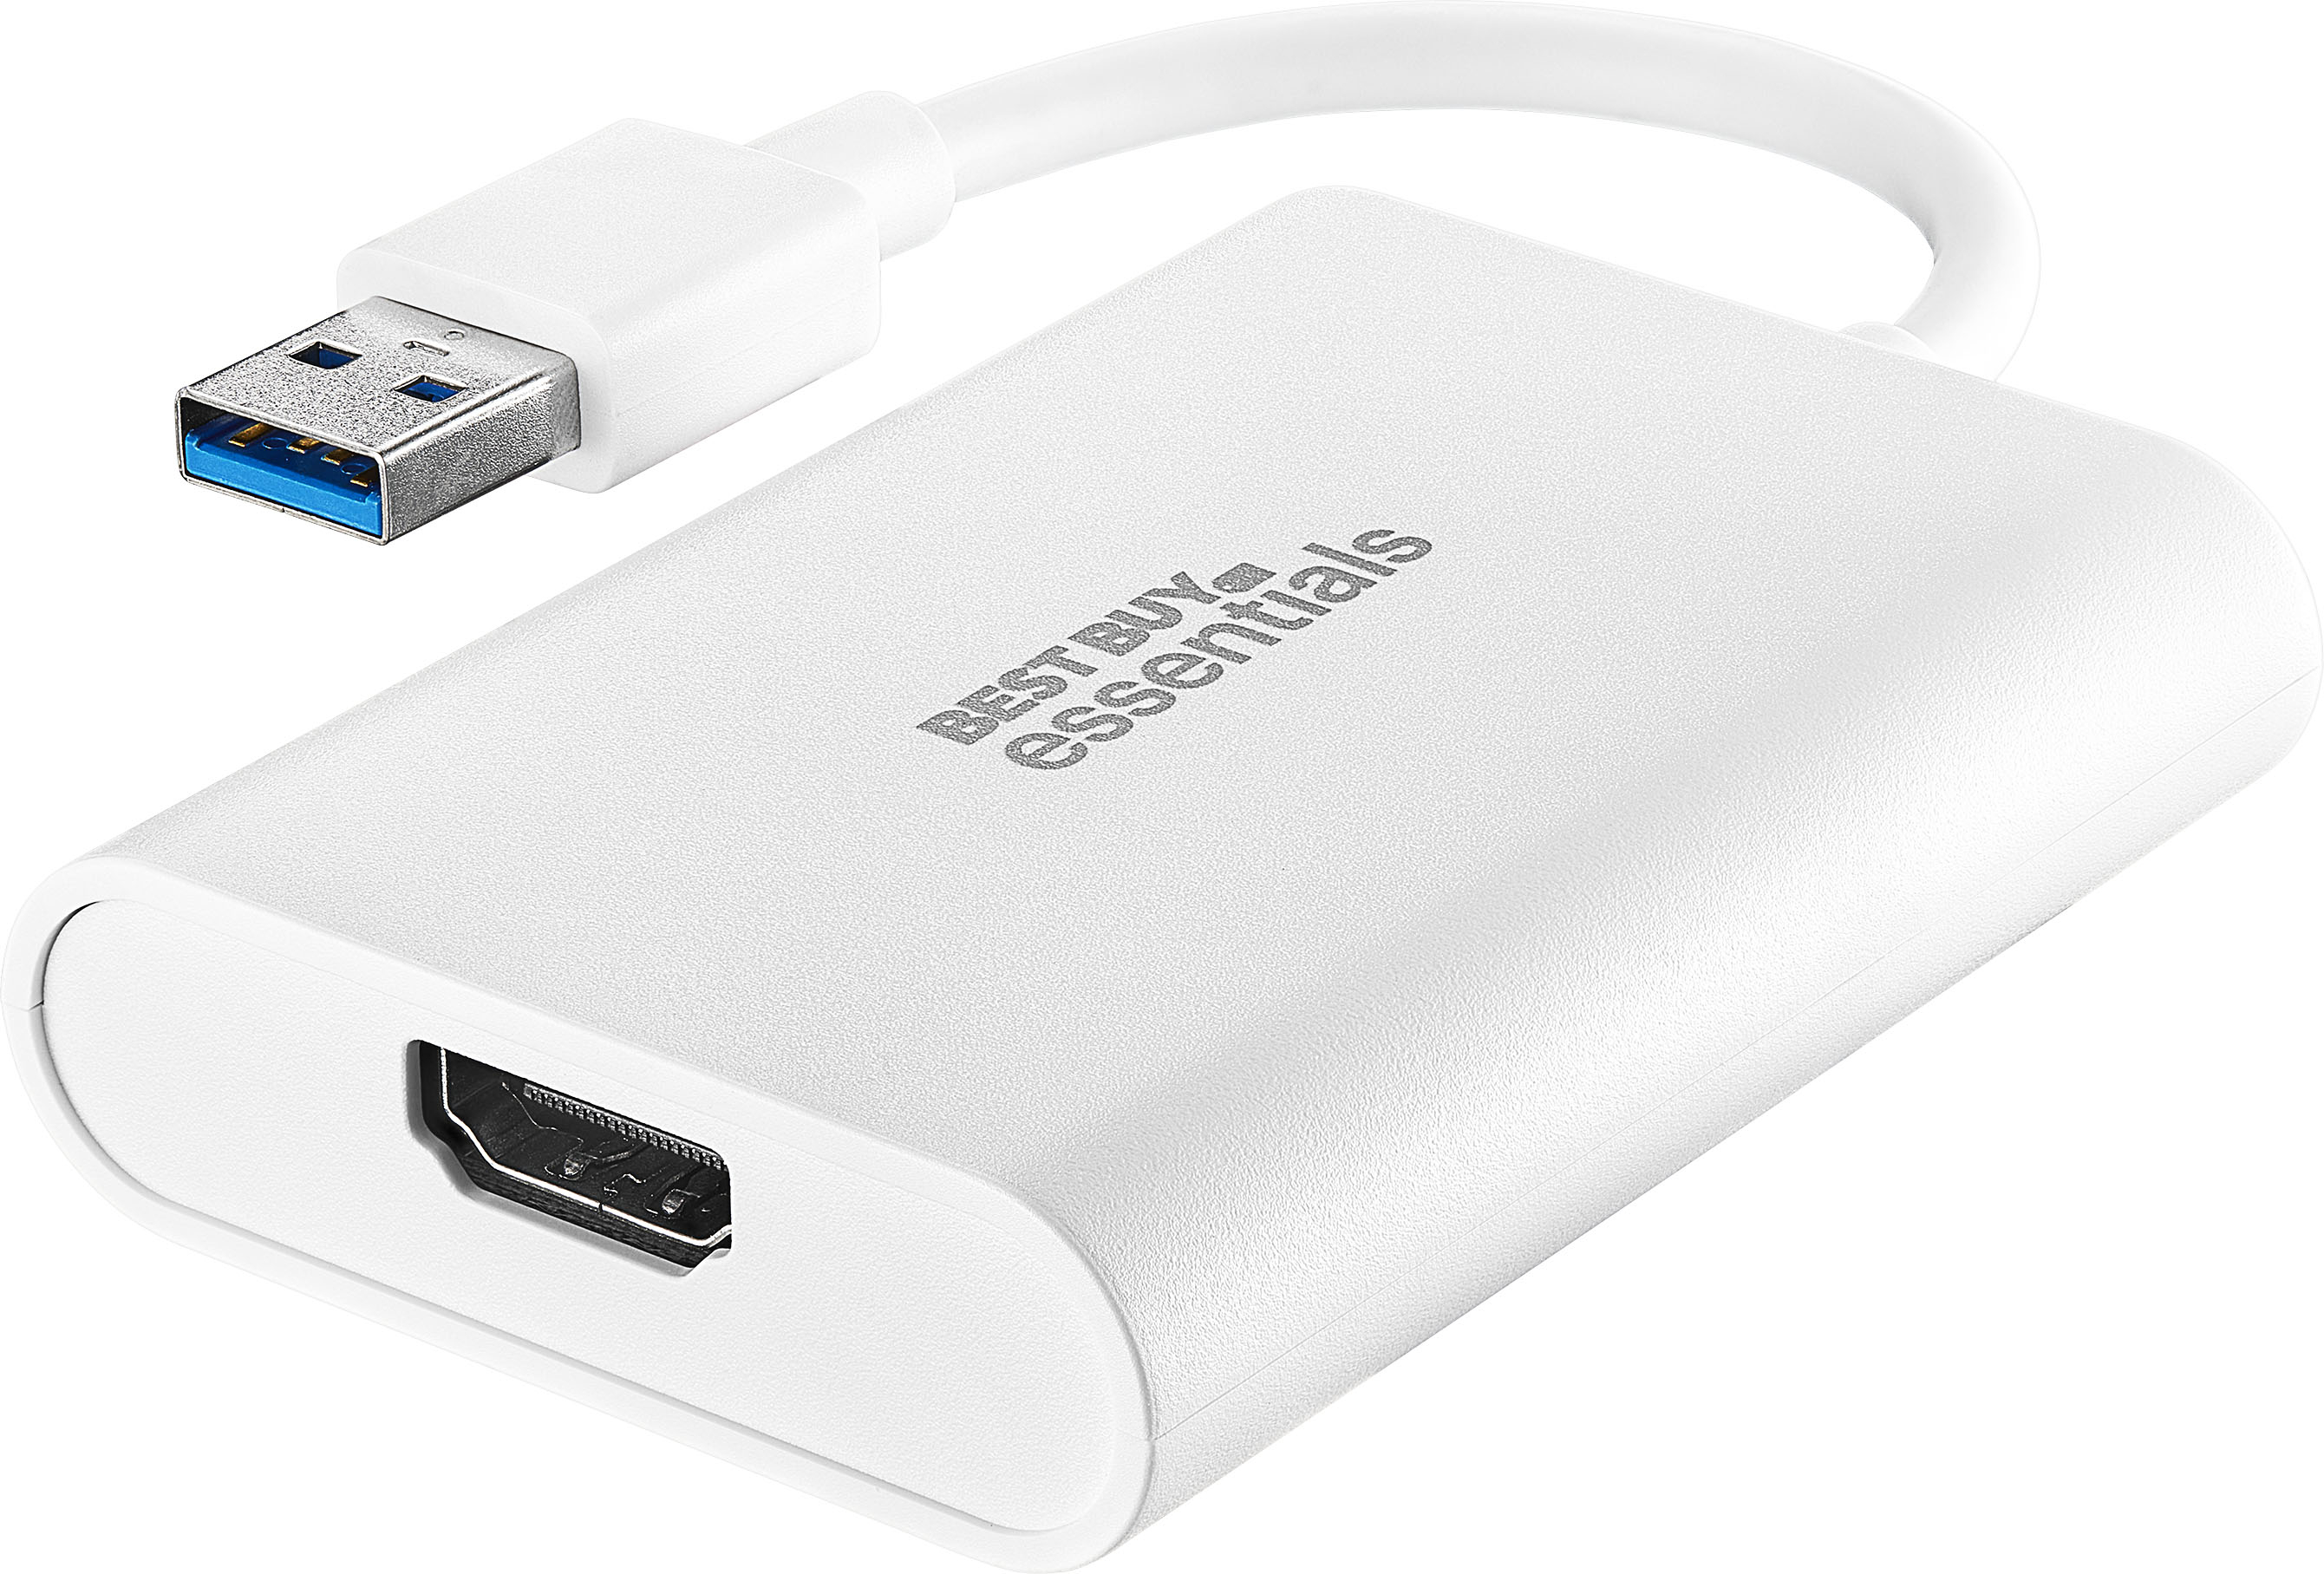 spreken het einde Stroomopwaarts Best Buy essentials™ USB to HDMI Adapter White BE-PA3UHD - Best Buy